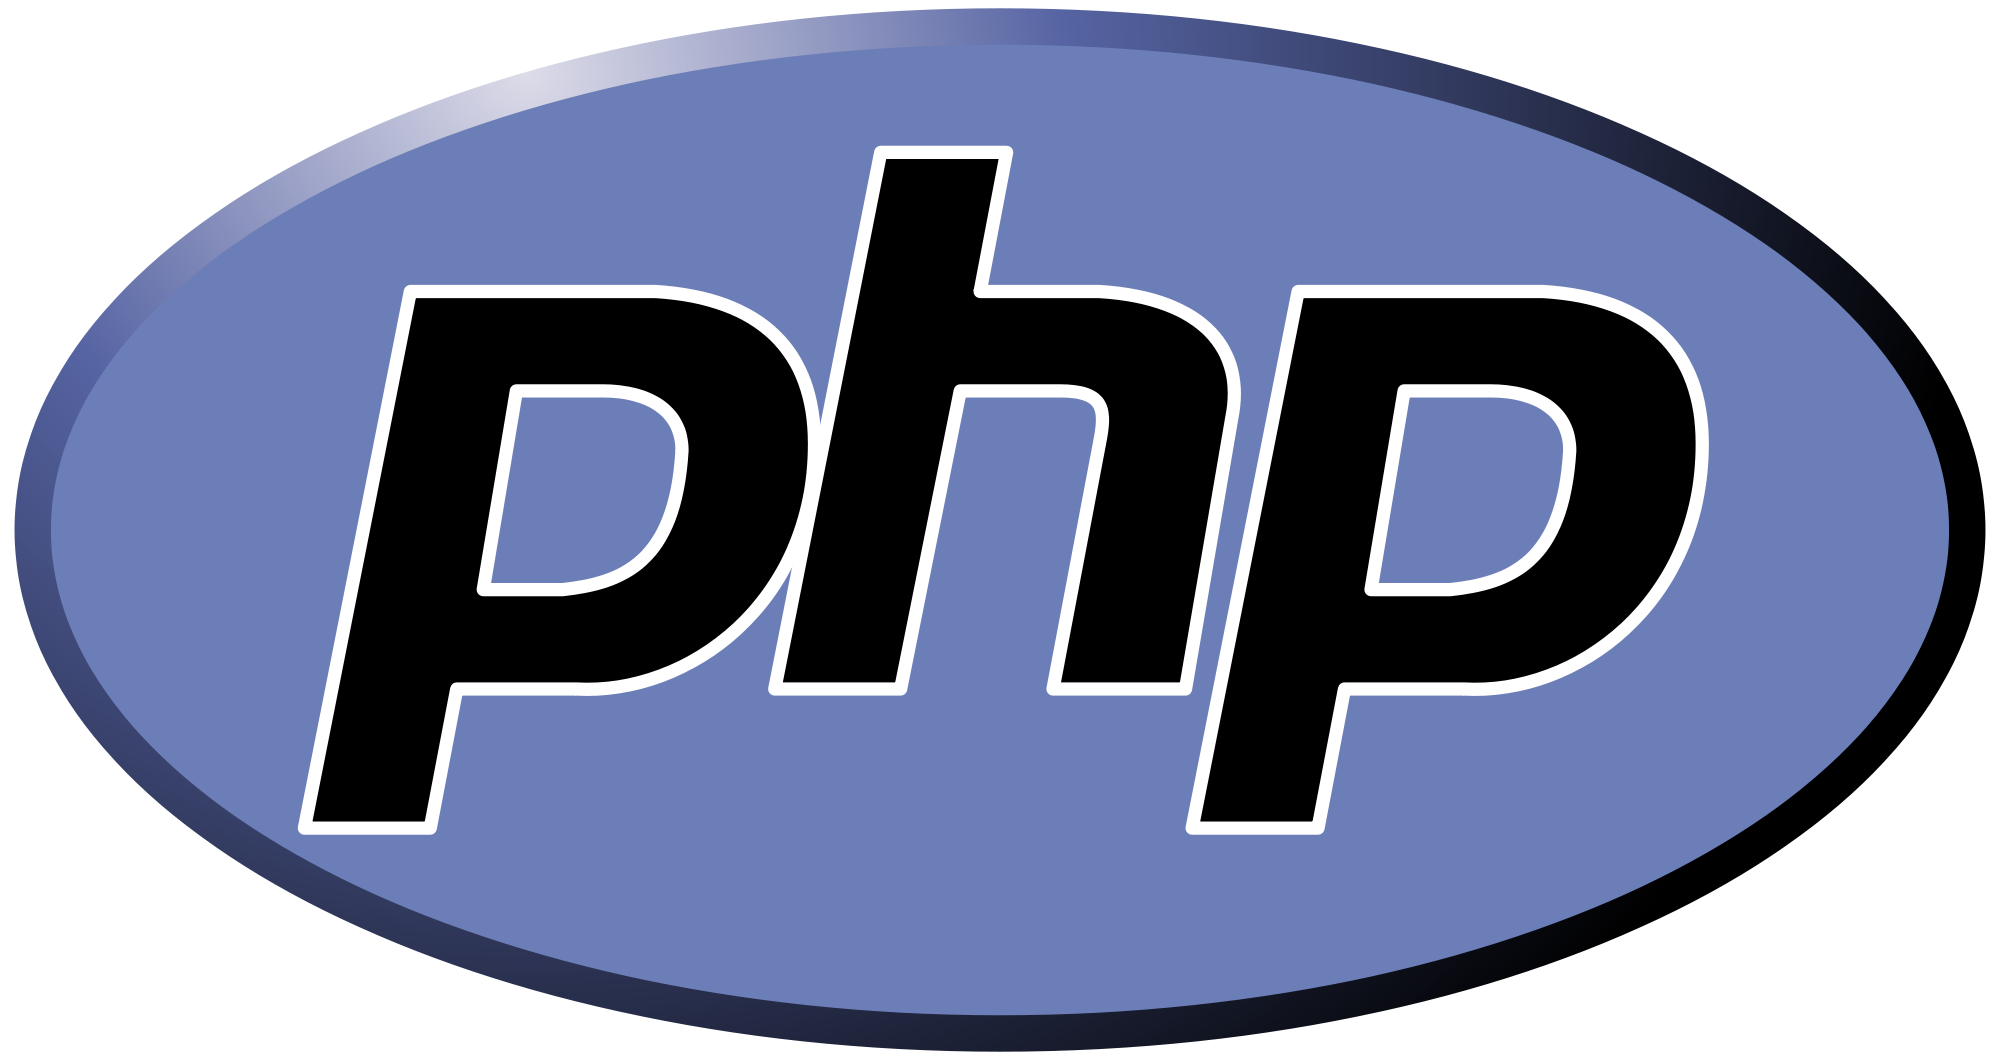 2000px-PHP-logo.svg1